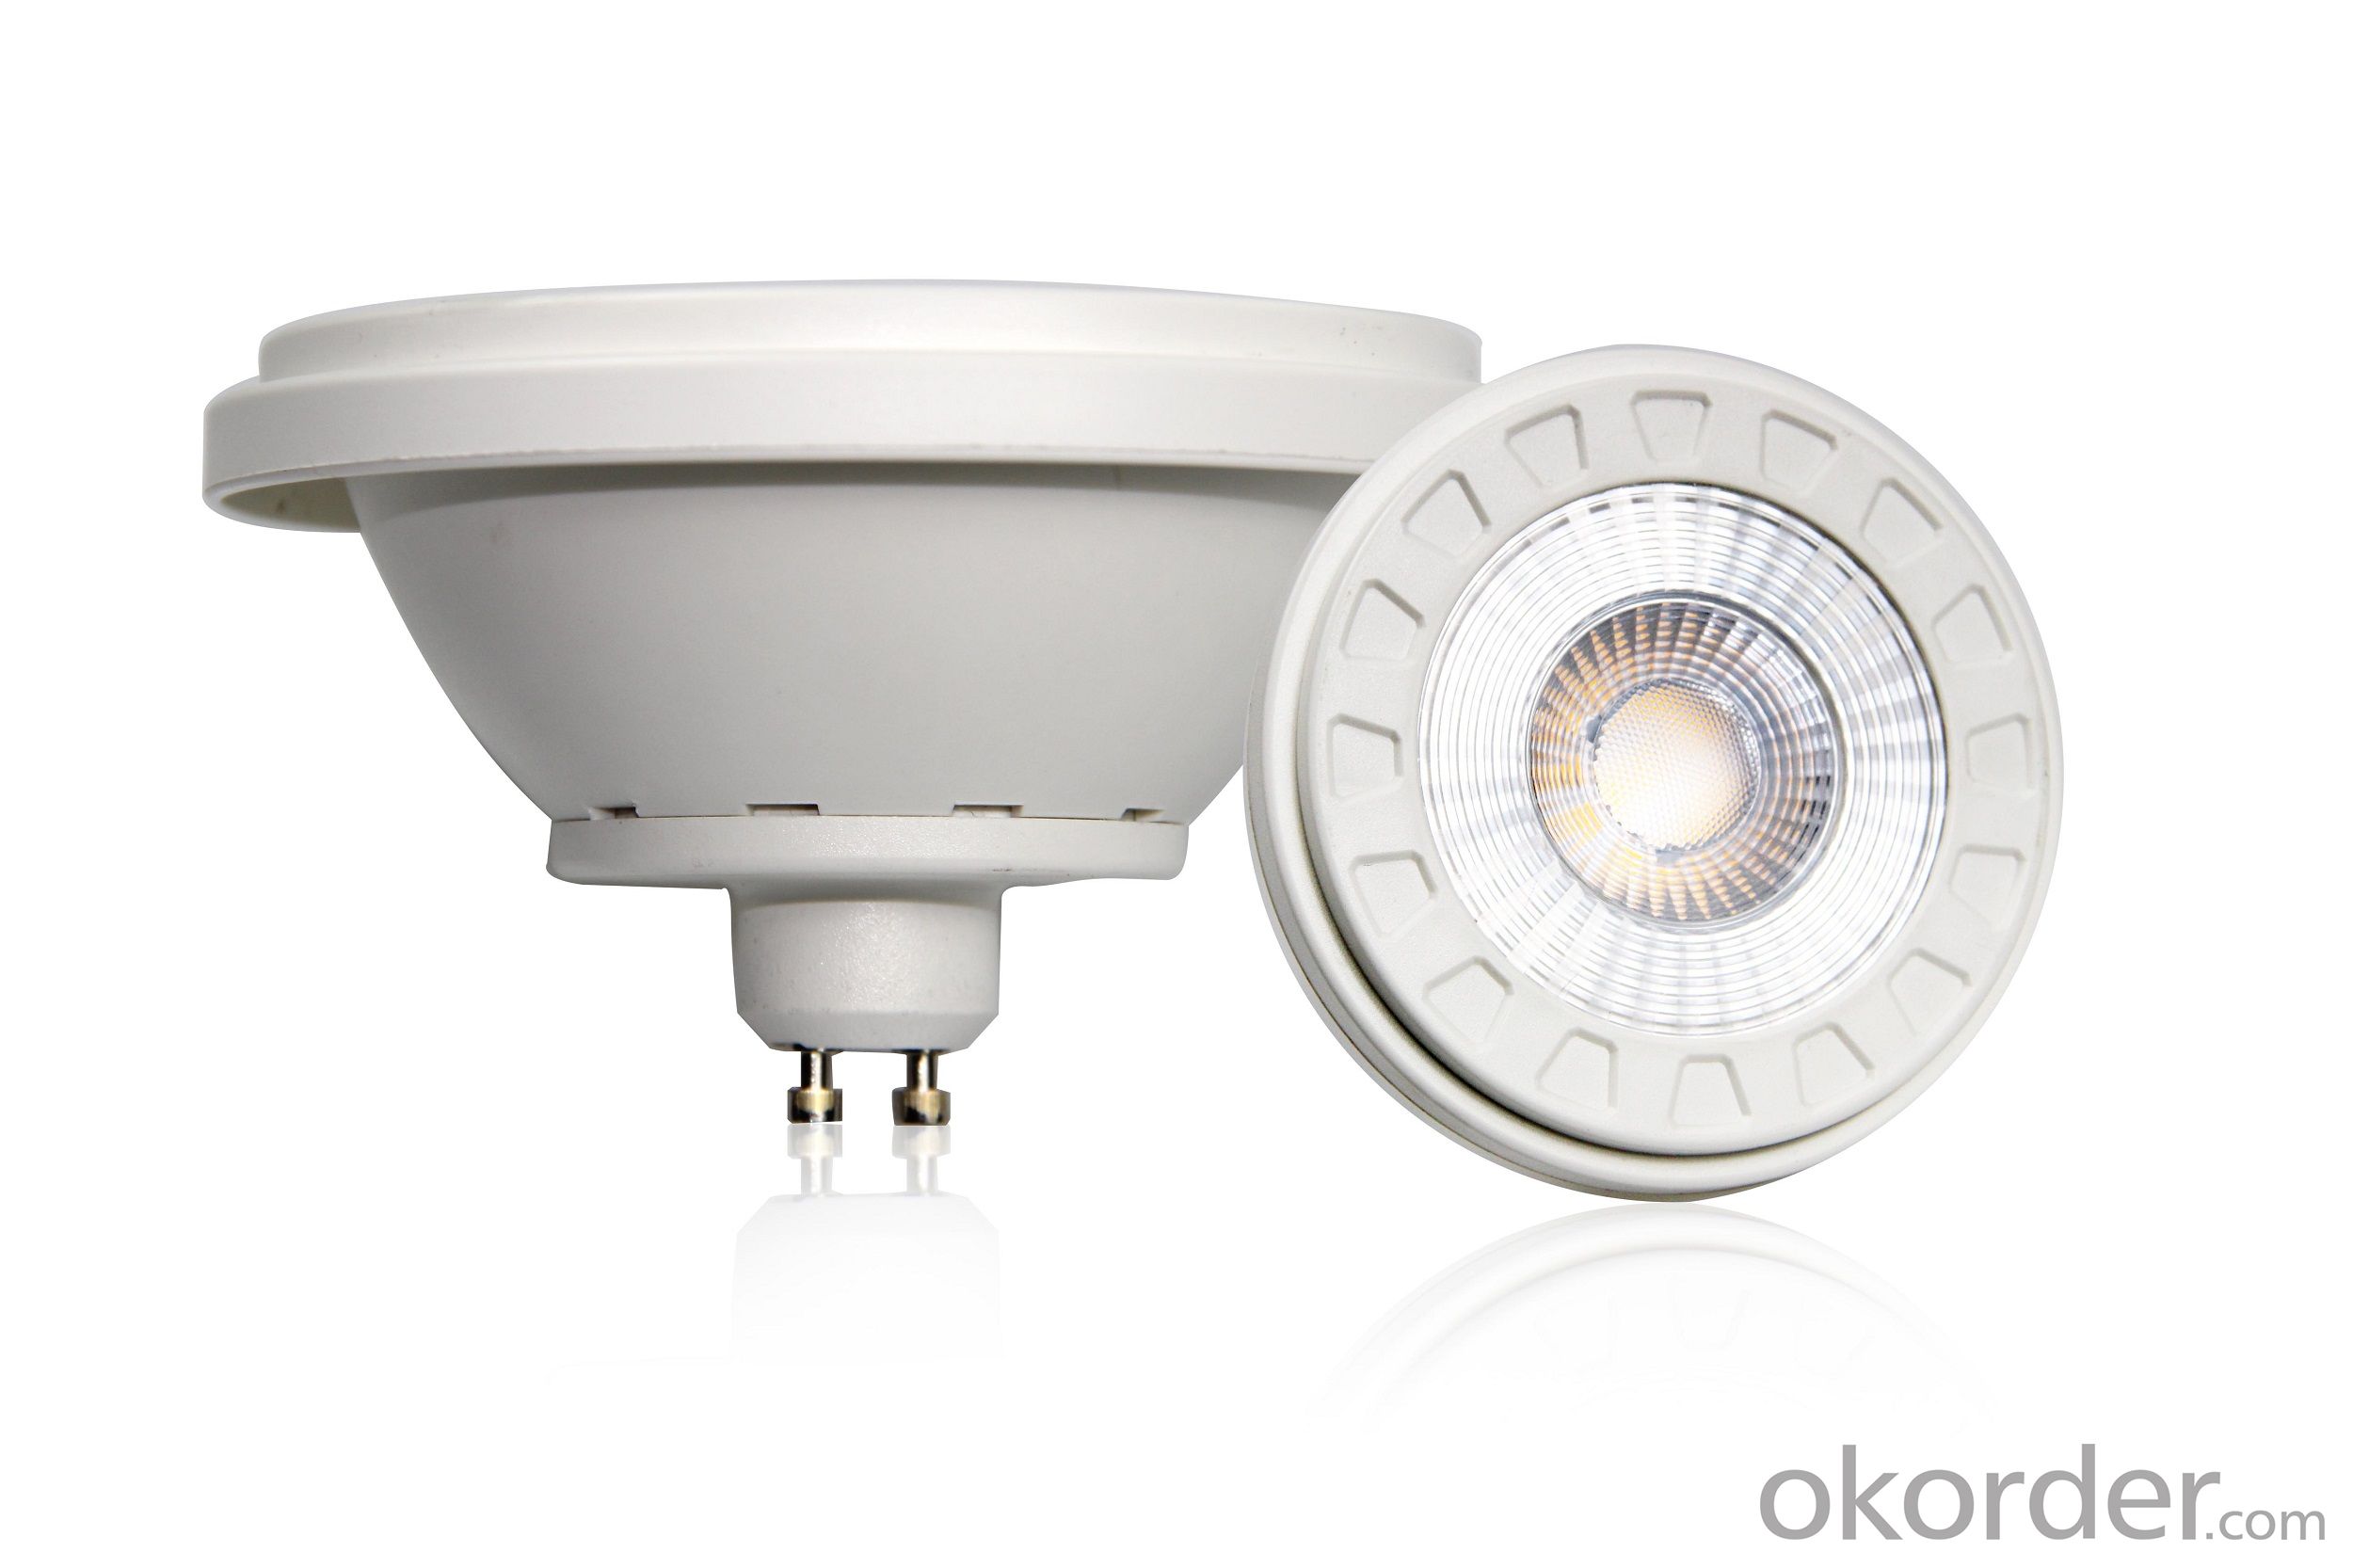 Bulb Light ES111 GU10  3000k-4000K-5000K-6500k 12W CRI 80  920 Lumen